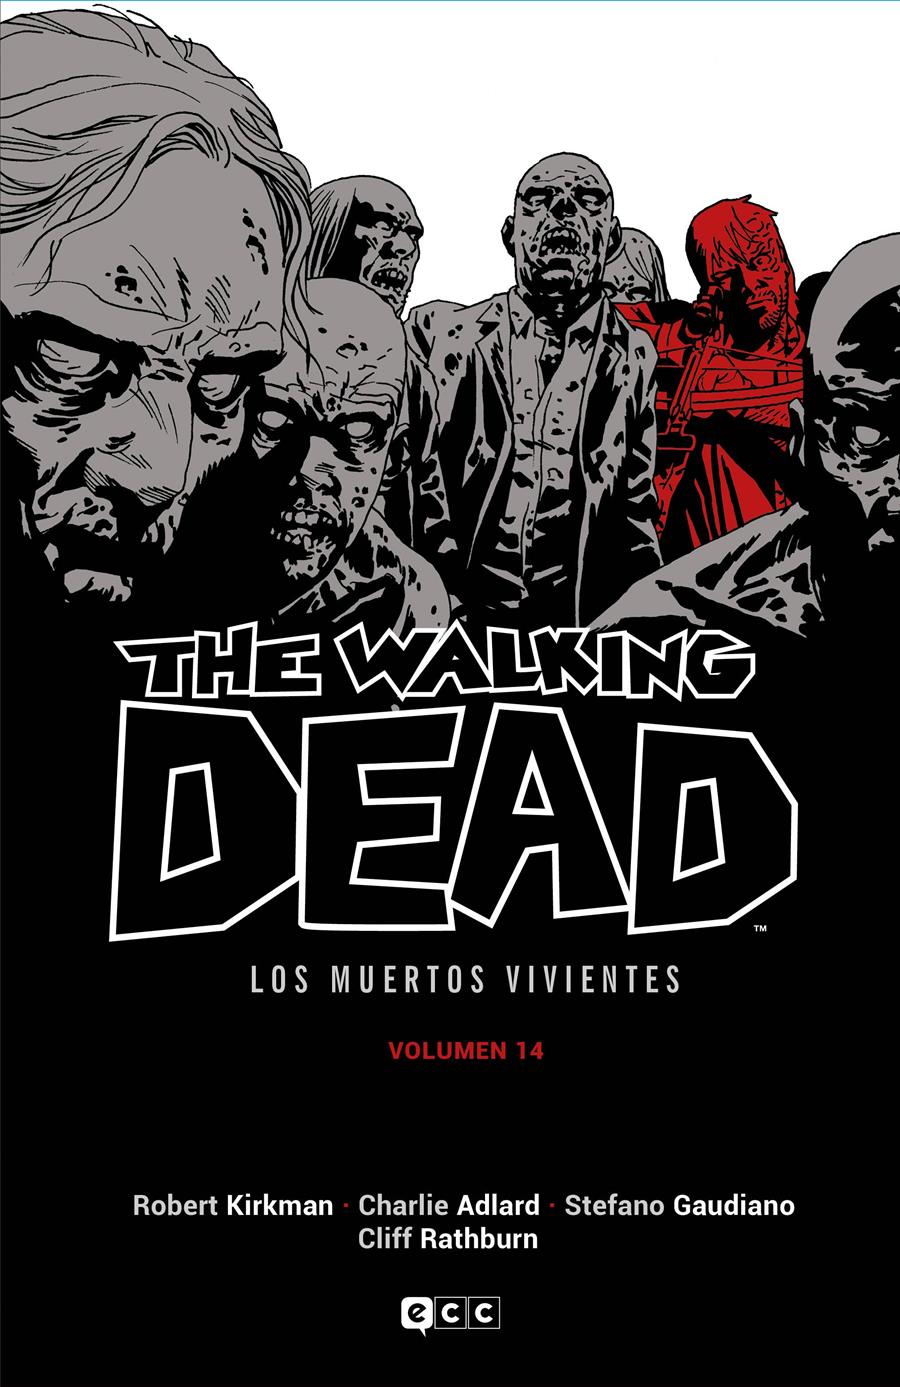 The Walking Dead (Los muertos vivientes) vol. 14 de 16 | N0323-ECC46 | Charlie Adlard / Robert Kirkman | Terra de Còmic - Tu tienda de cómics online especializada en cómics, manga y merchandising